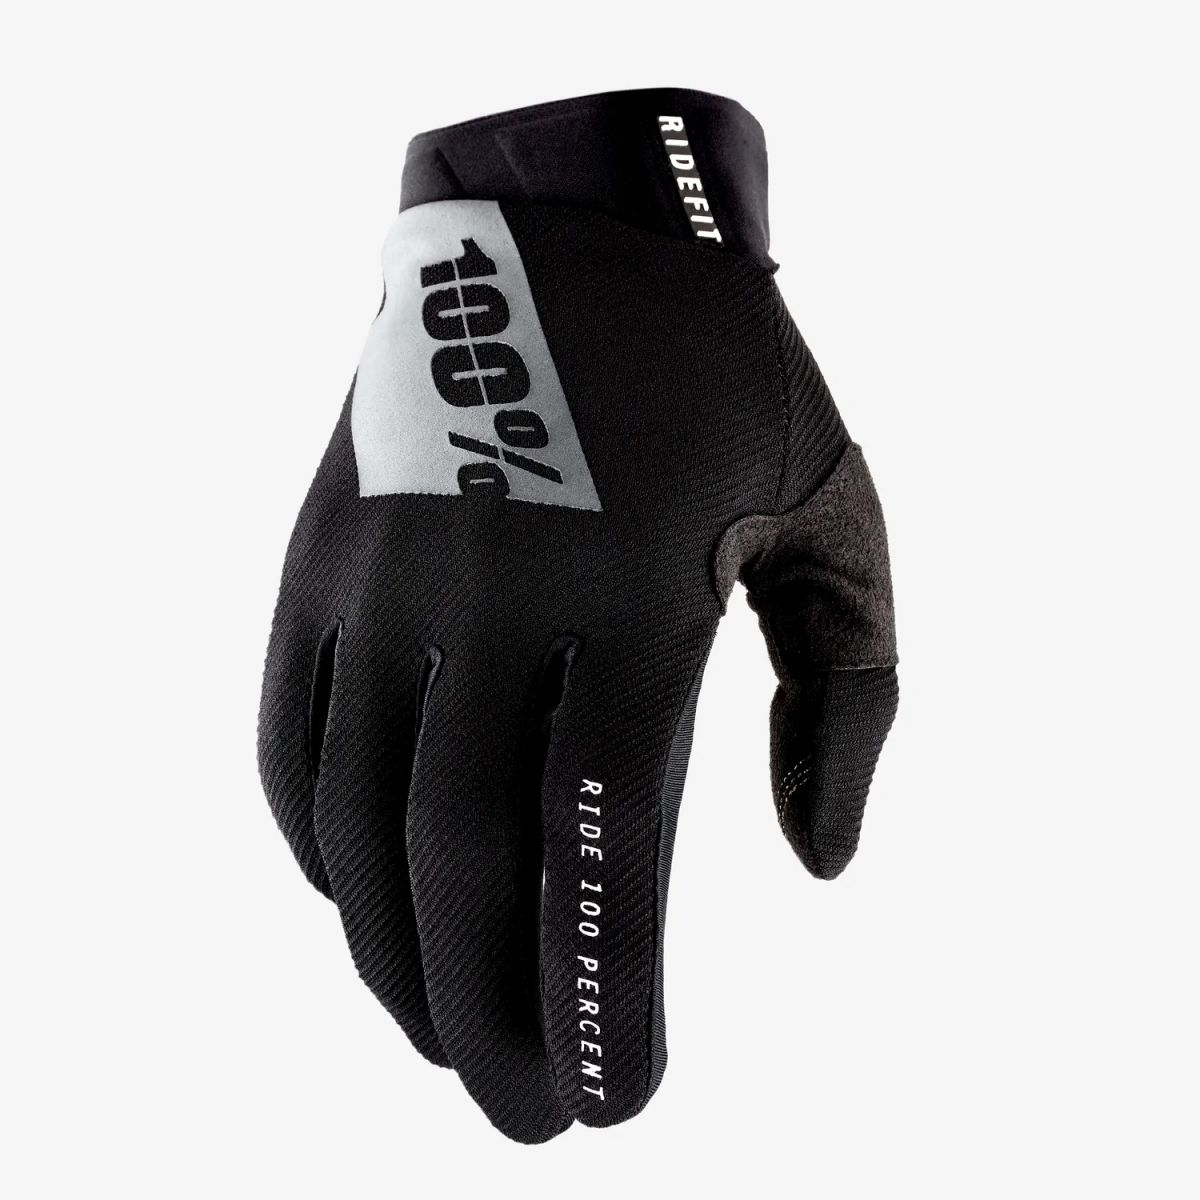 100% Ridefit Glove Black/White перчатки для мотокросса и эндуро